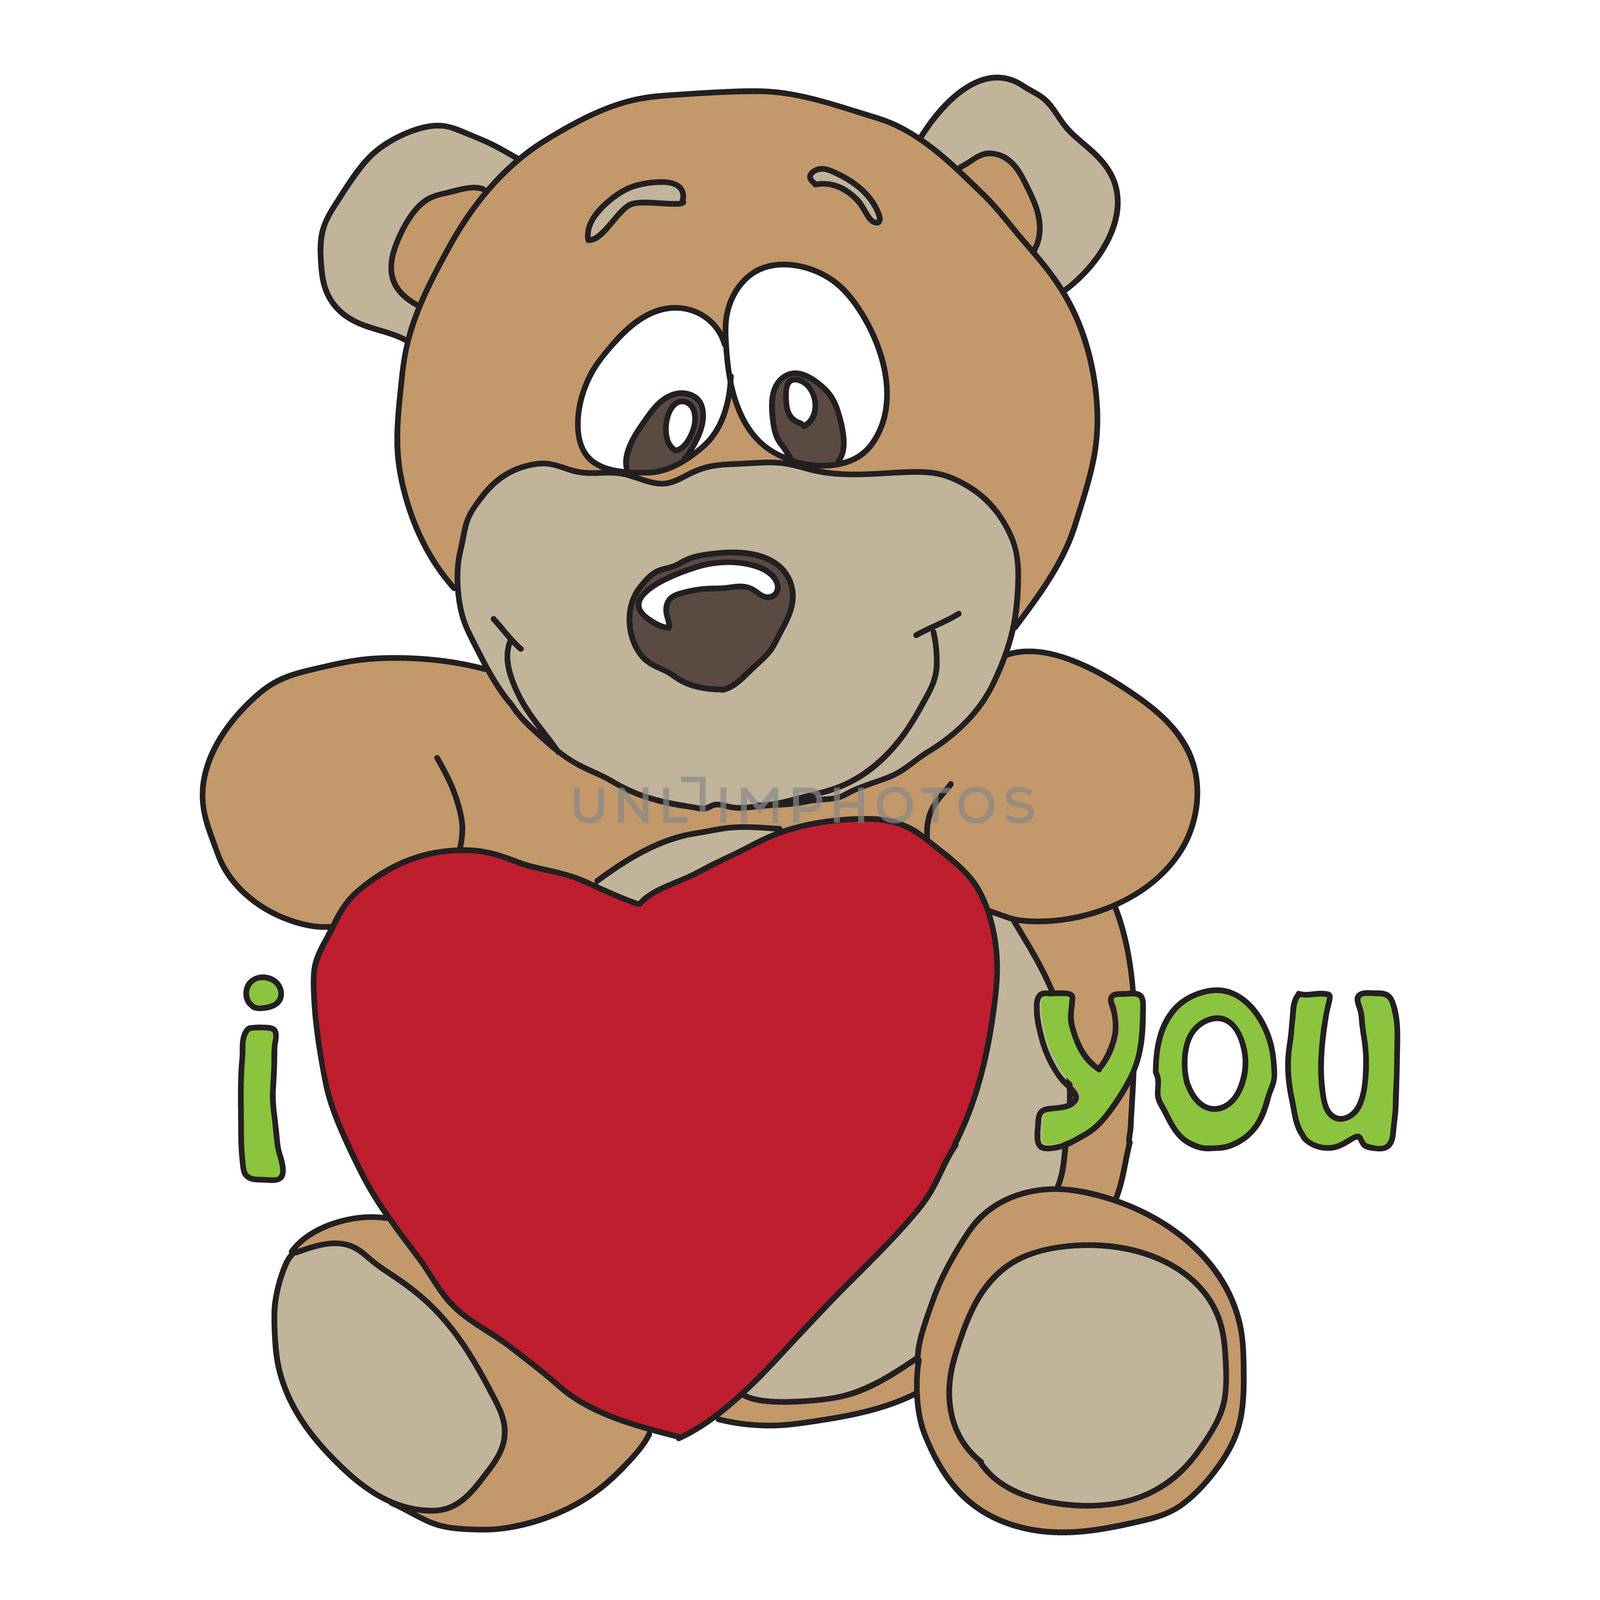 nice cartoon style illustration of funny bear with heart